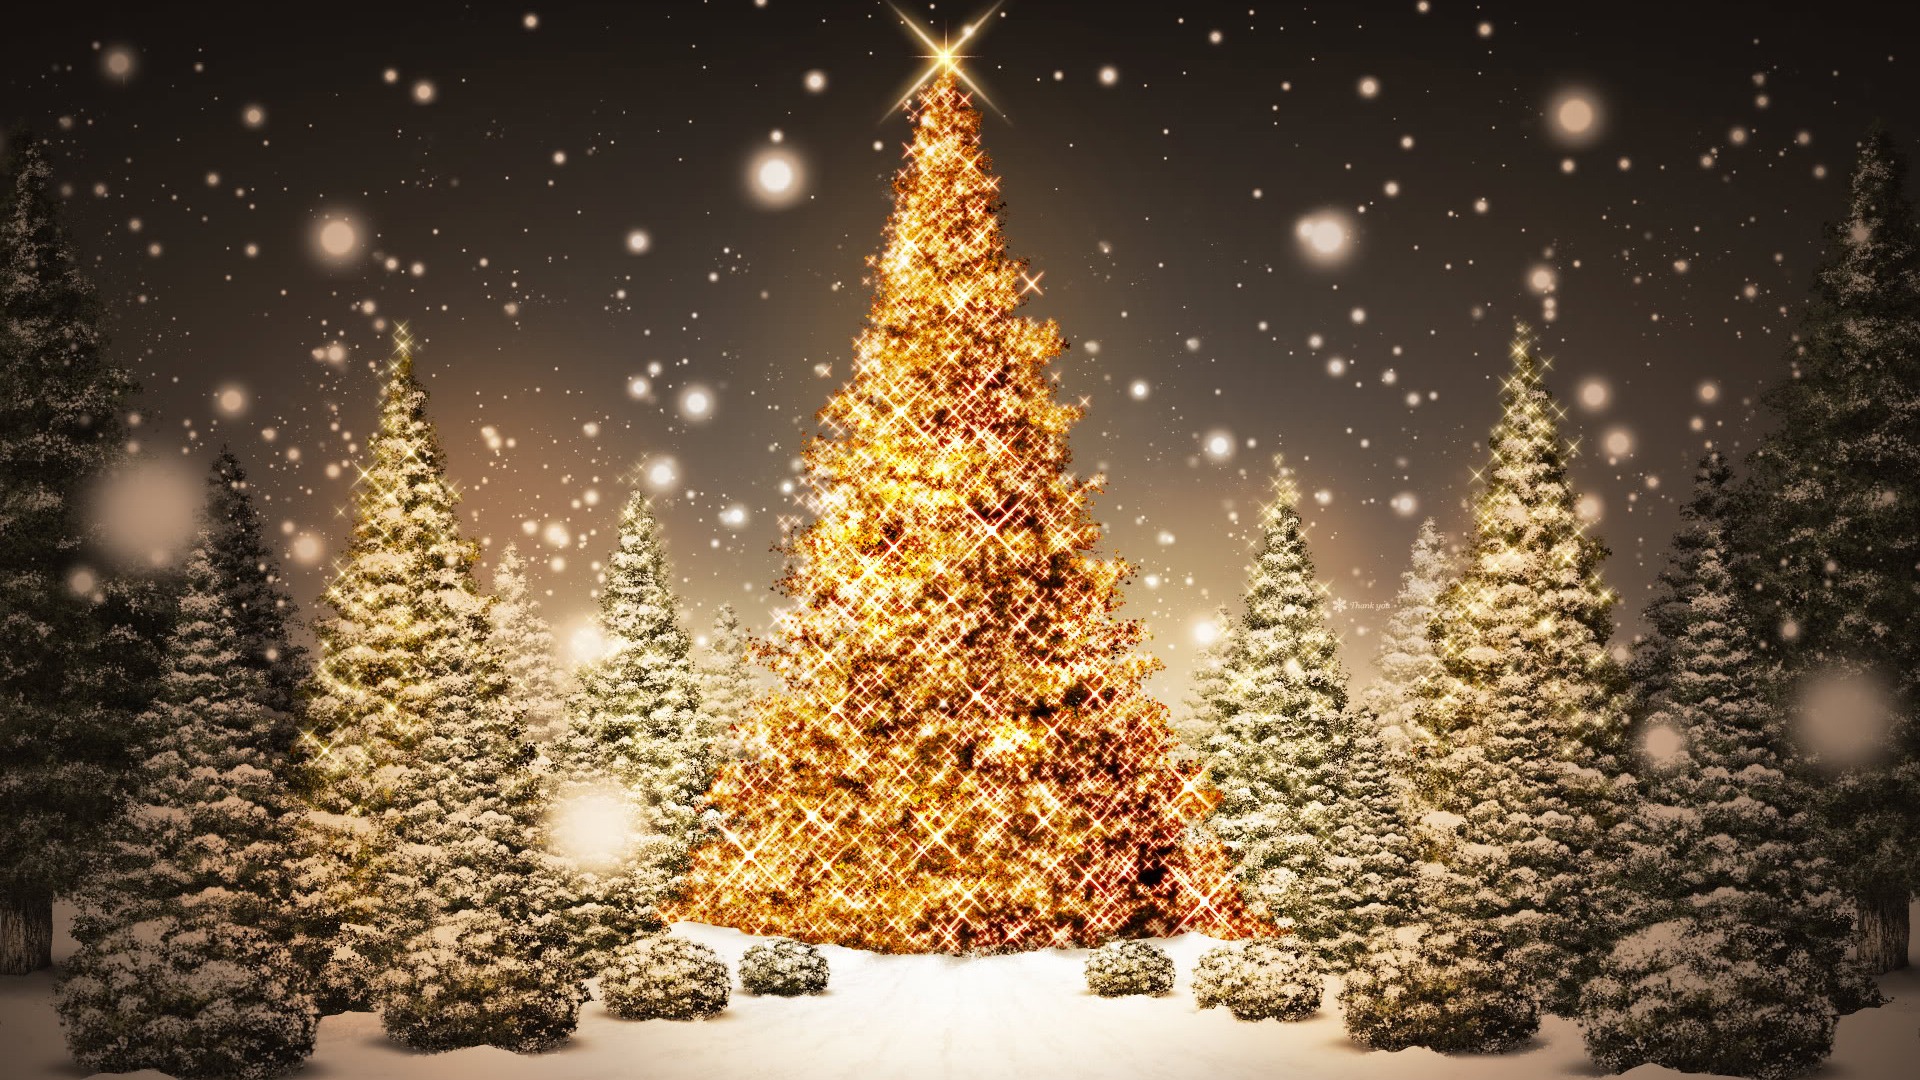 100+ Merry Christmas Desktop Wallpaper & Background Free Download -  QuotesProject.Com | Christmas desktop wallpaper, Christmas desktop, Merry christmas  wallpaper